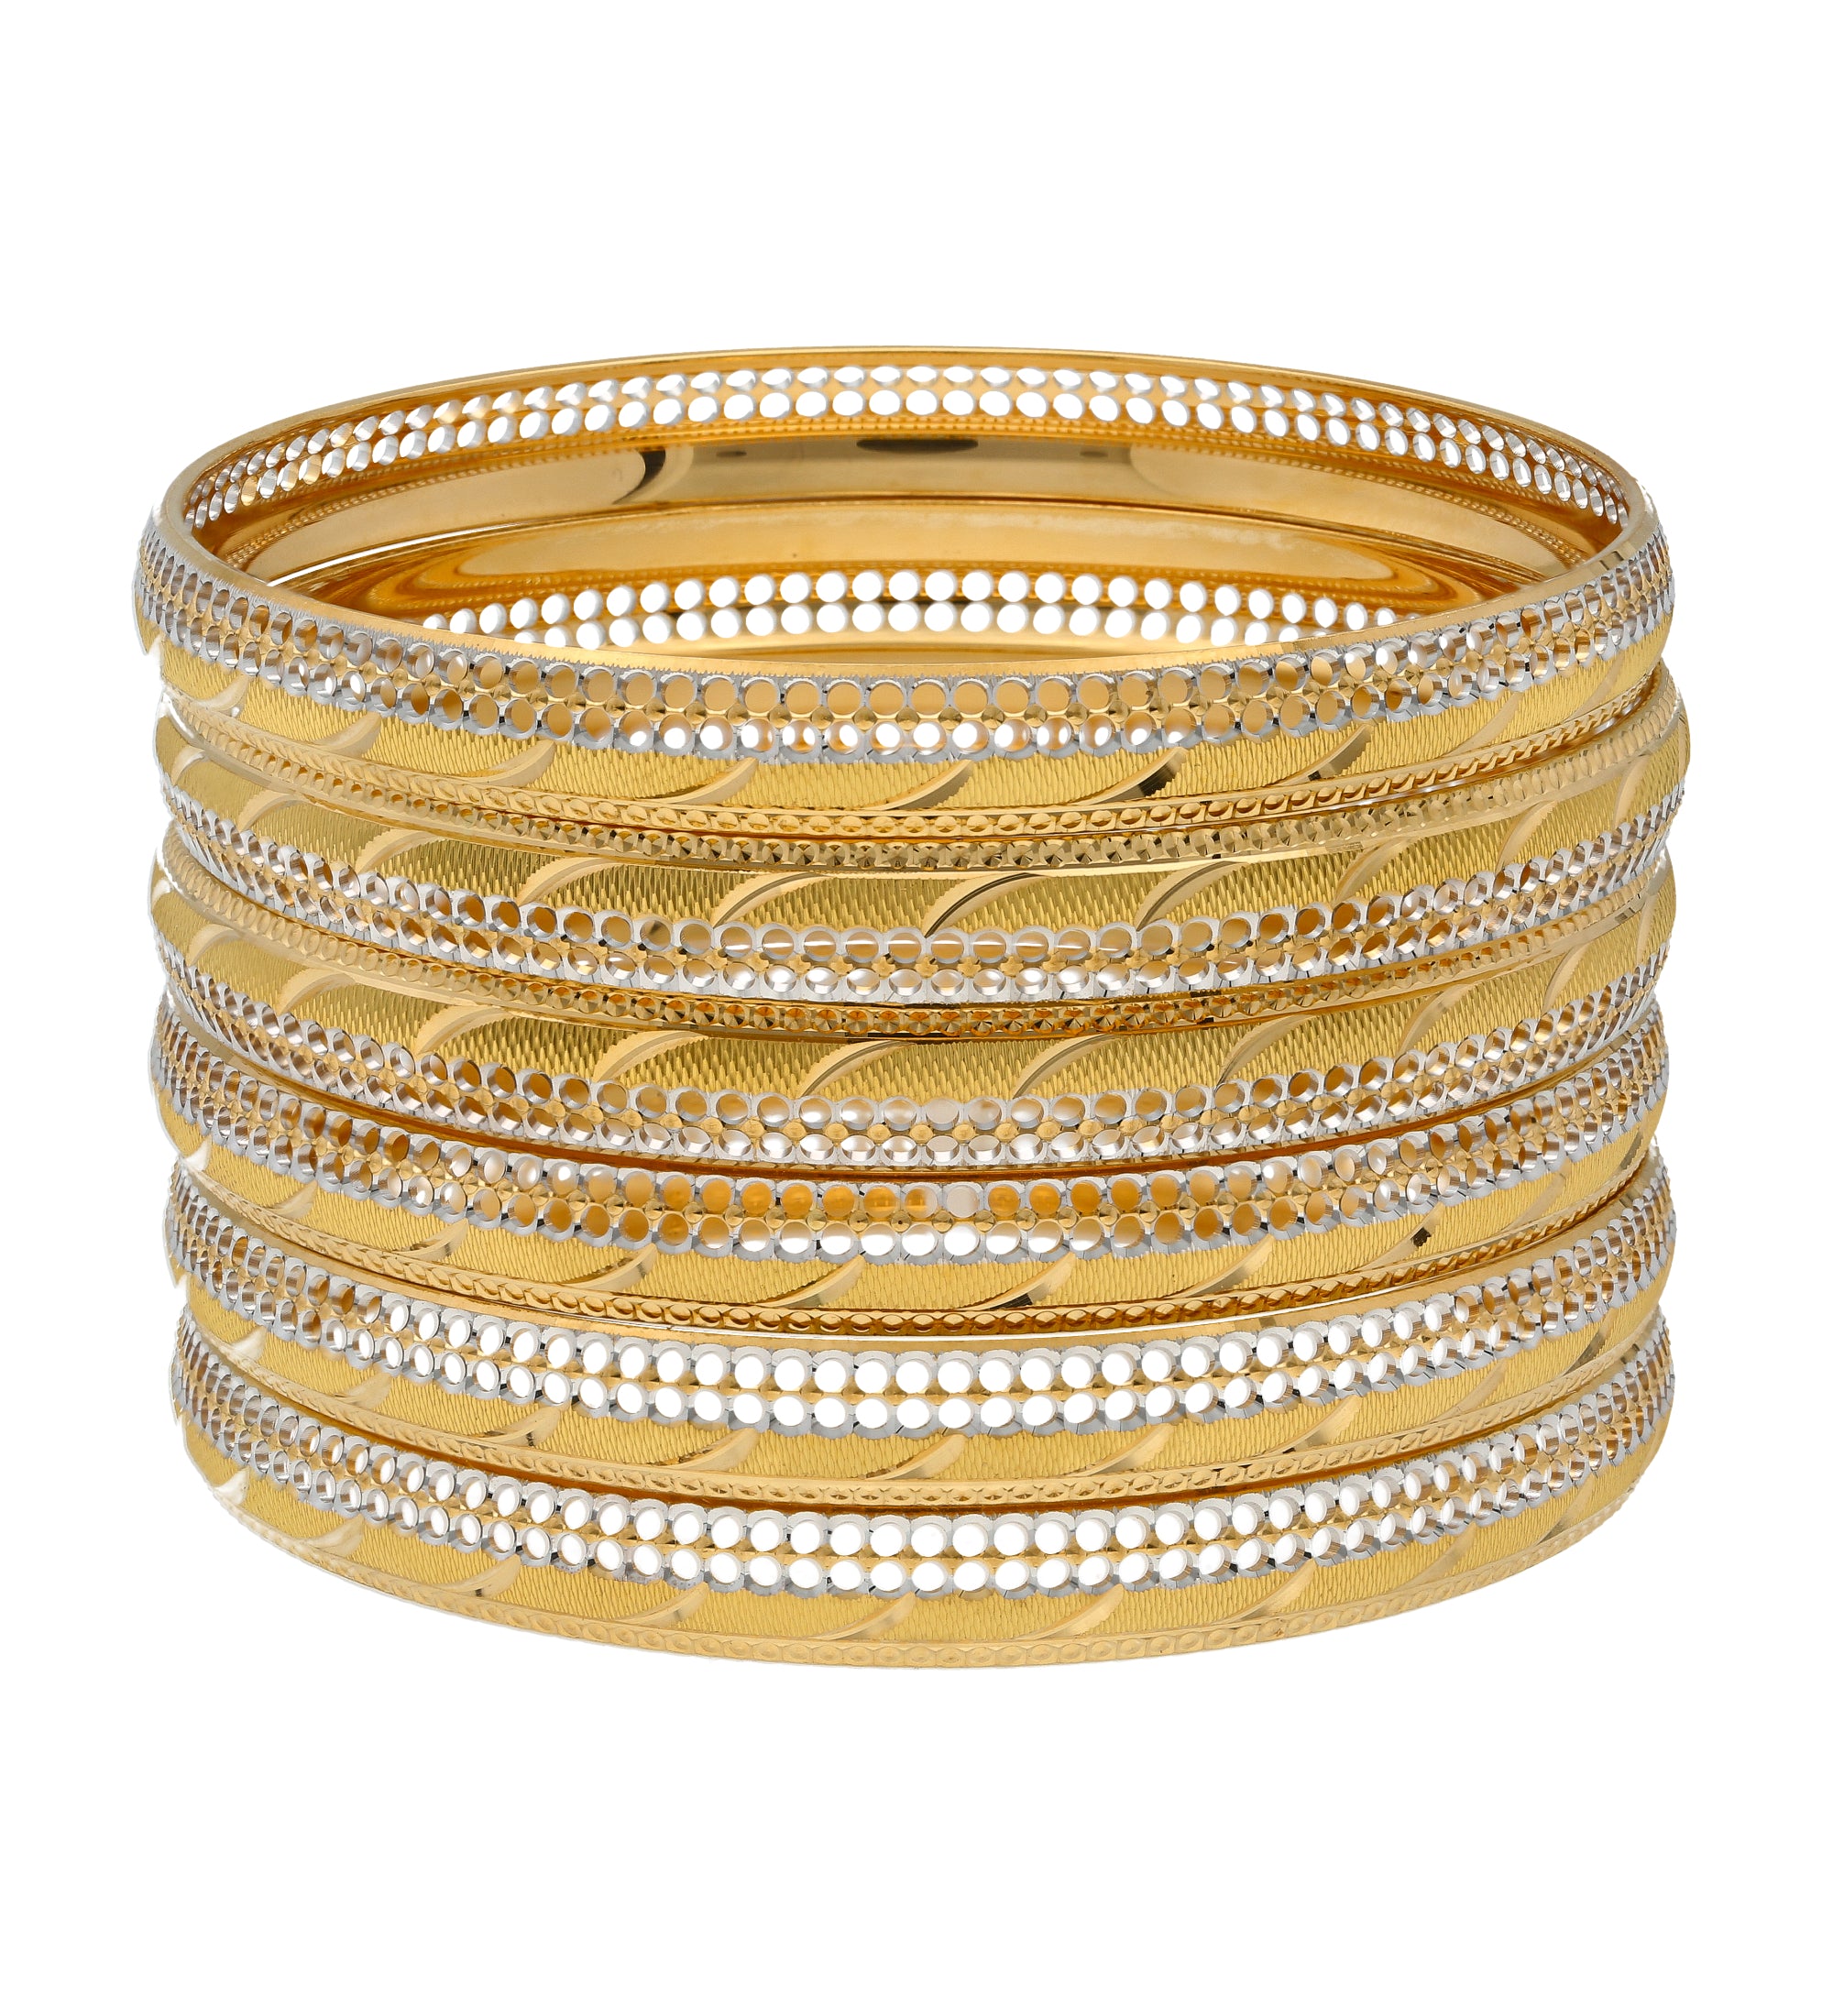 Buy Fresh Vibes Contemporary Design Golden Bangle Bracelet with Heart  charms for Women (Free Size) - Stylish & Fancy Sleek & Elegant Breslet Kada  for Girls at Amazon.in